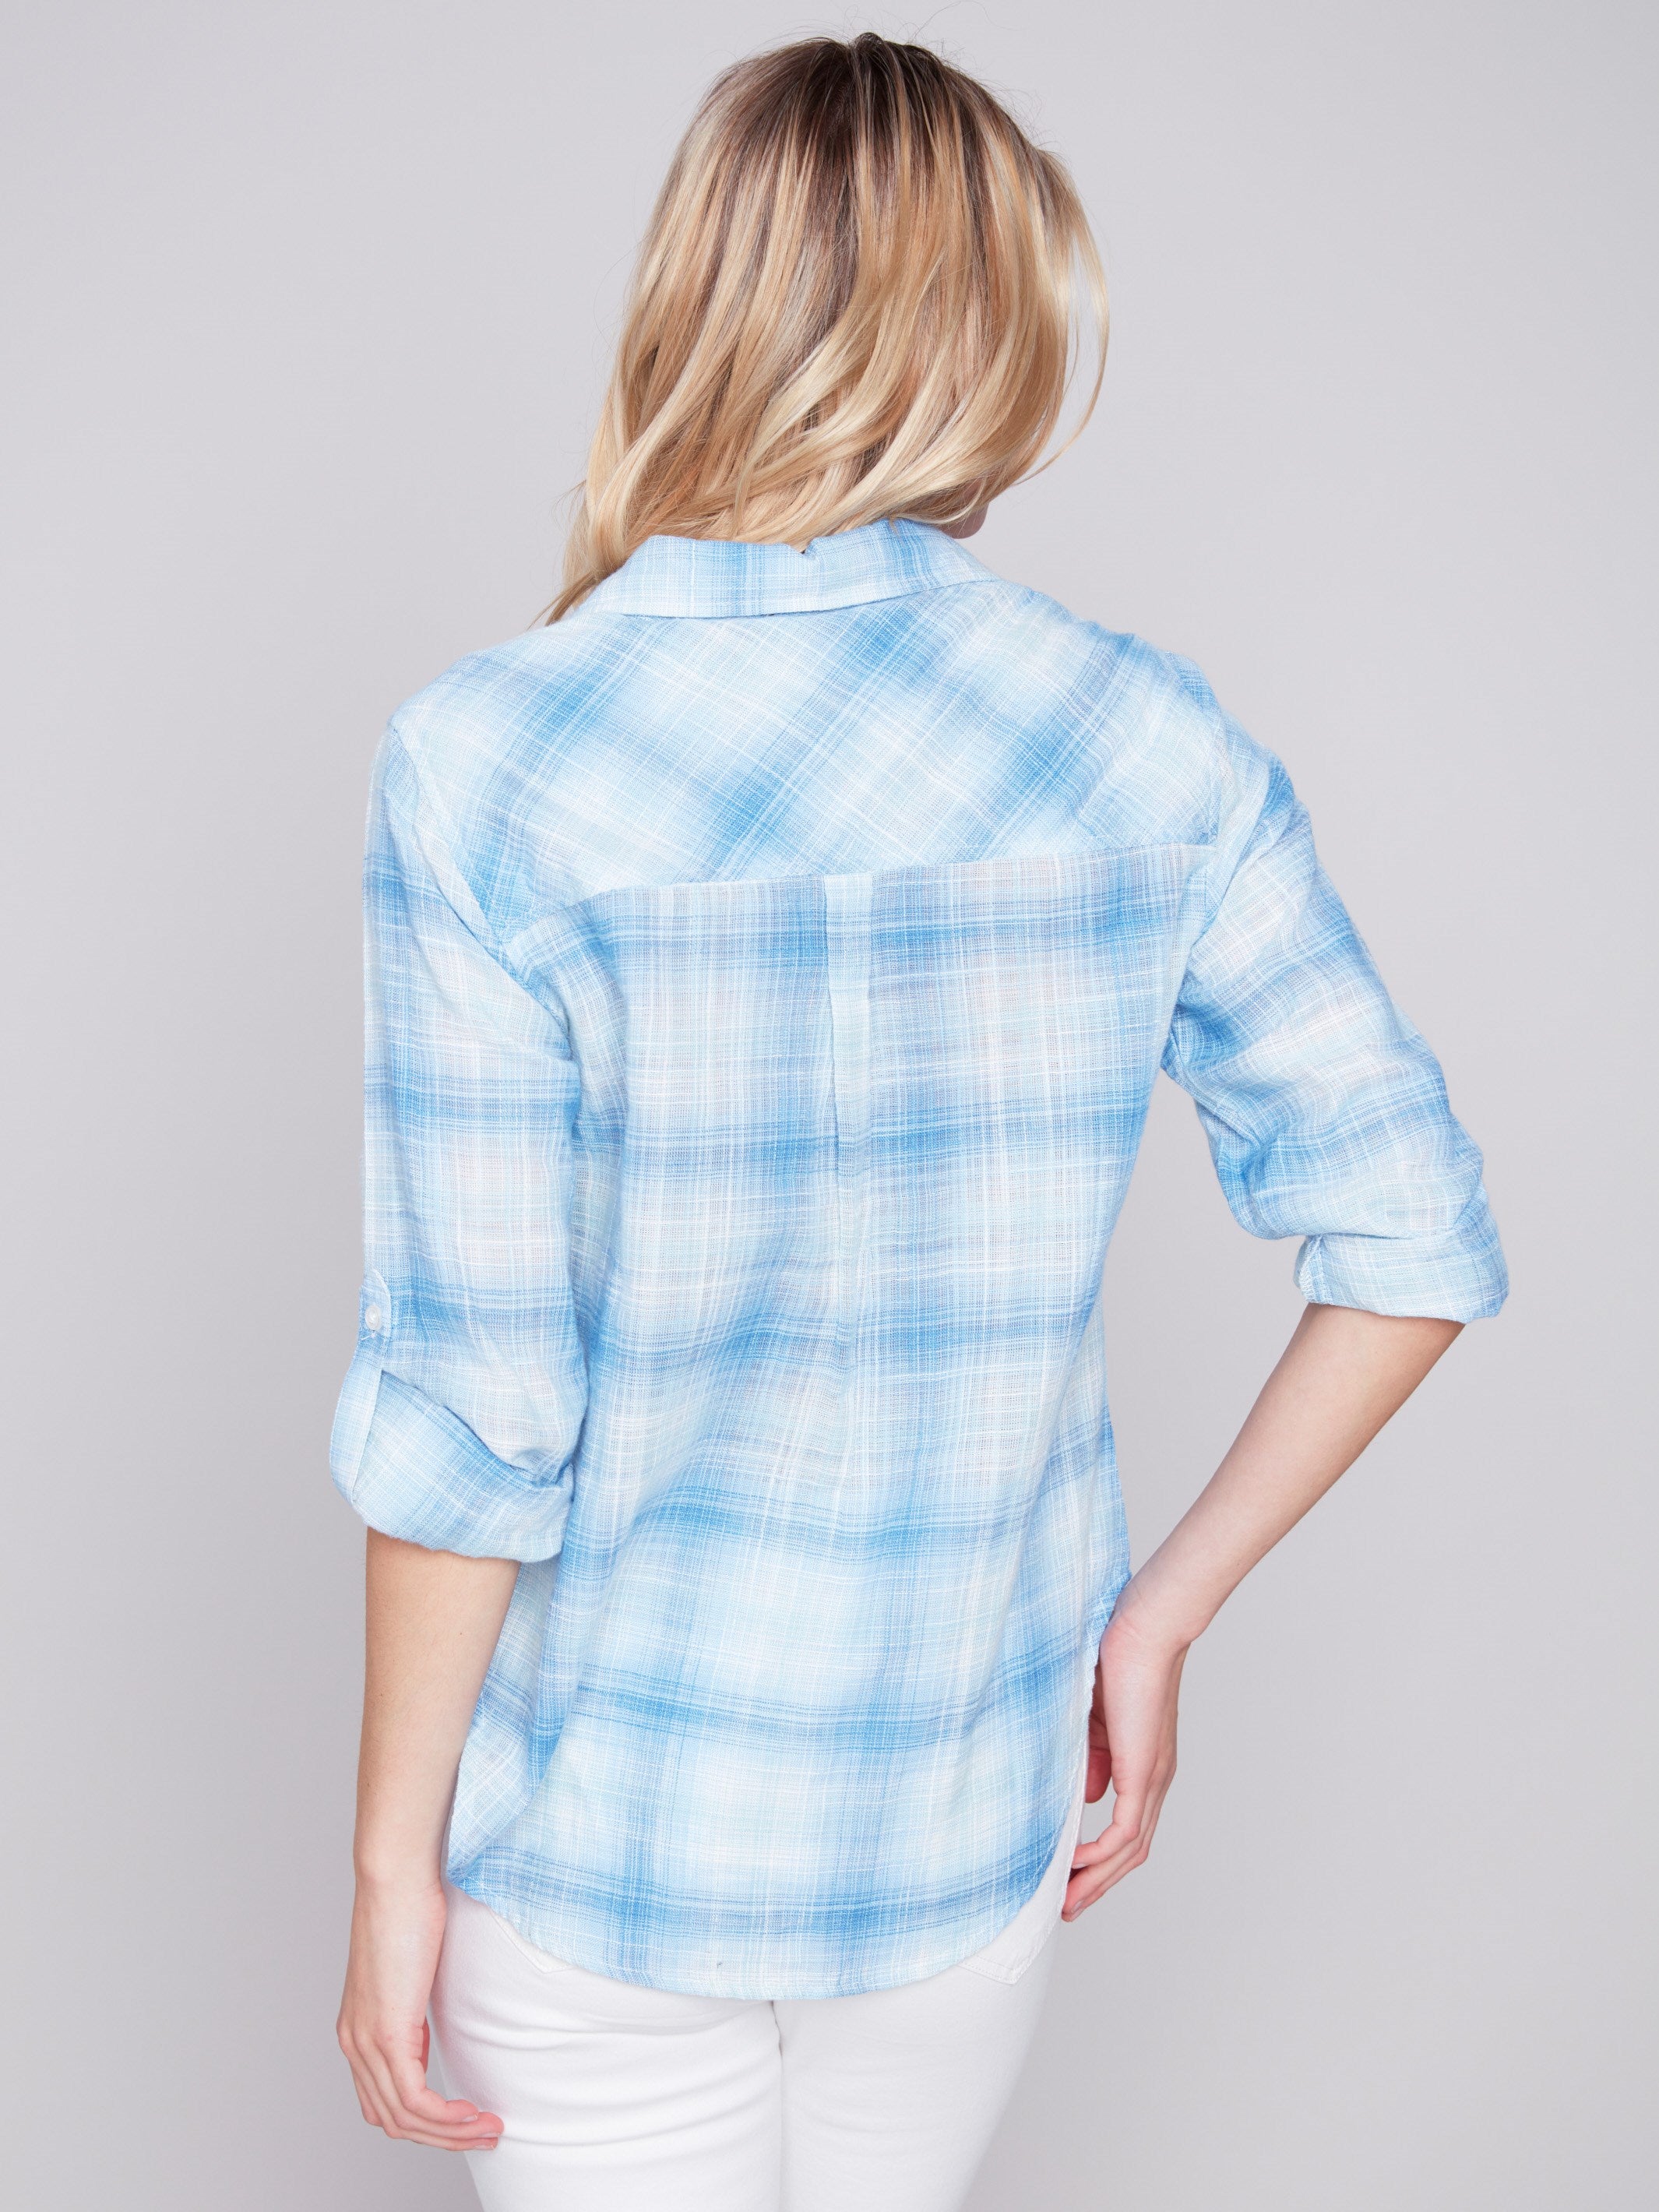 Charlie B Plaid Cotton Gauze Shirt - Blue - Image 4